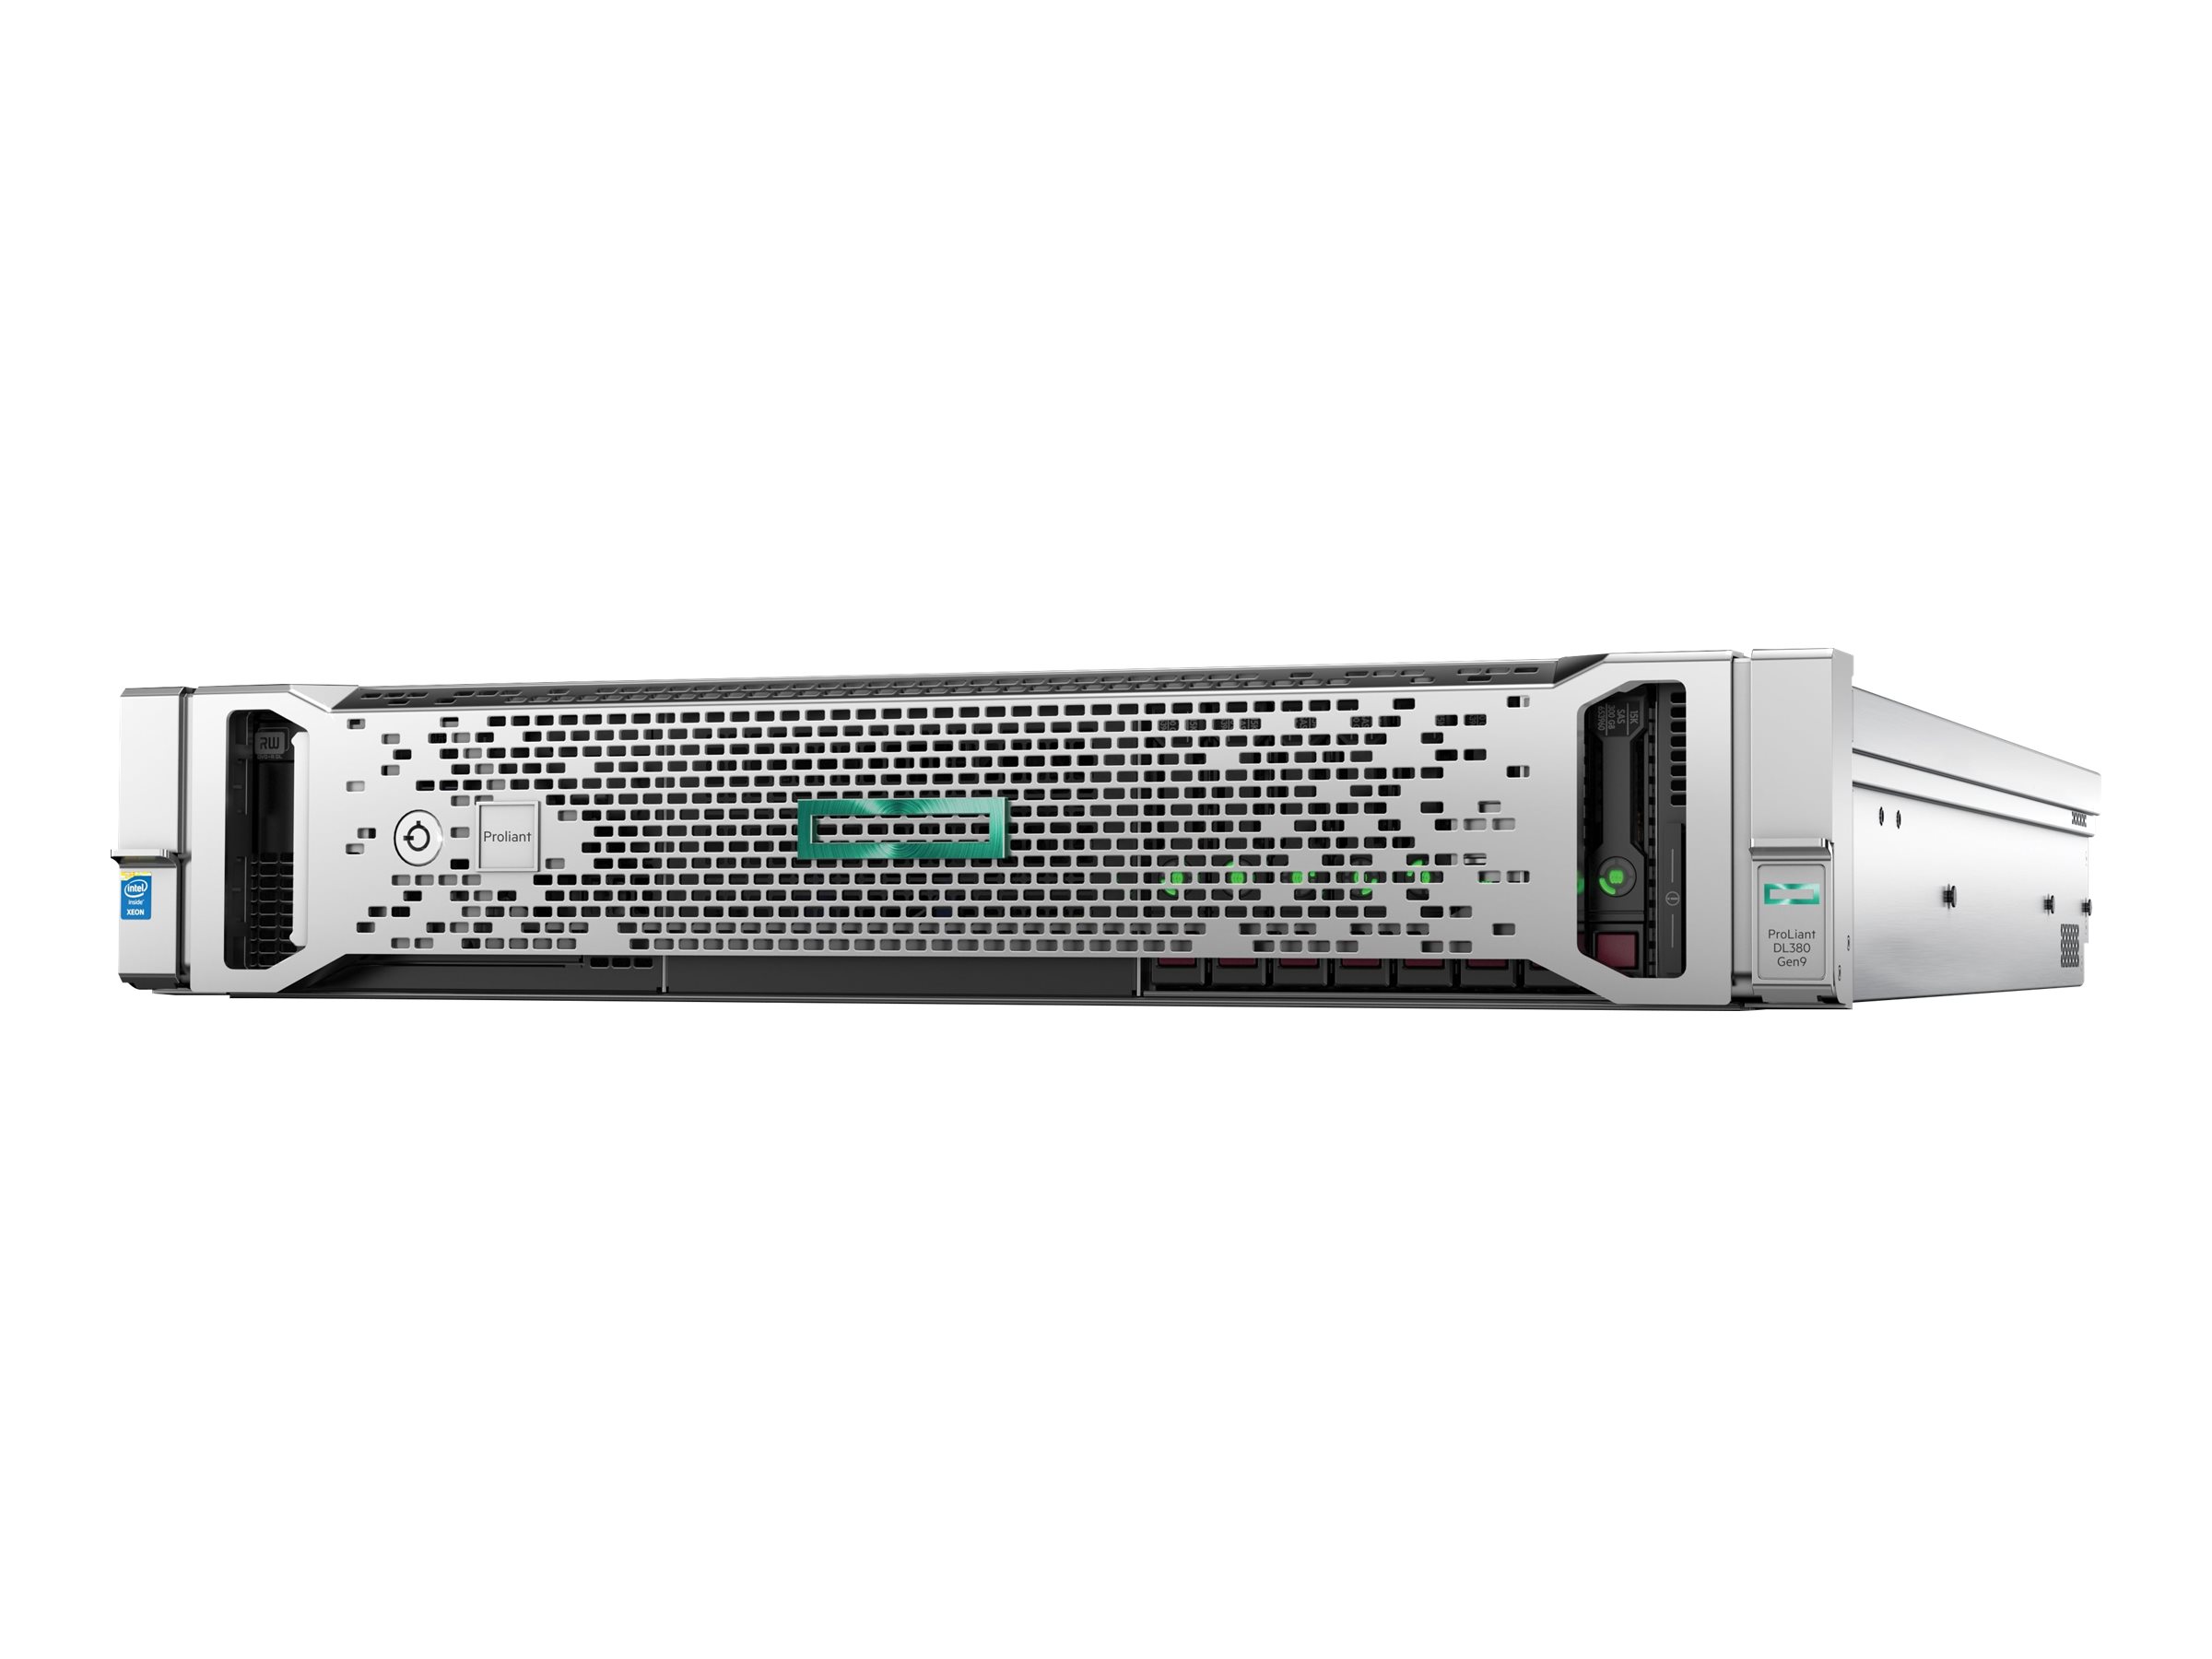 HPE ProLiant DL380 Gen9 Base - Server - Rack-Montage - 2U - zweiweg - 1 x Xeon E5-2620V4 / 2.1 GHz